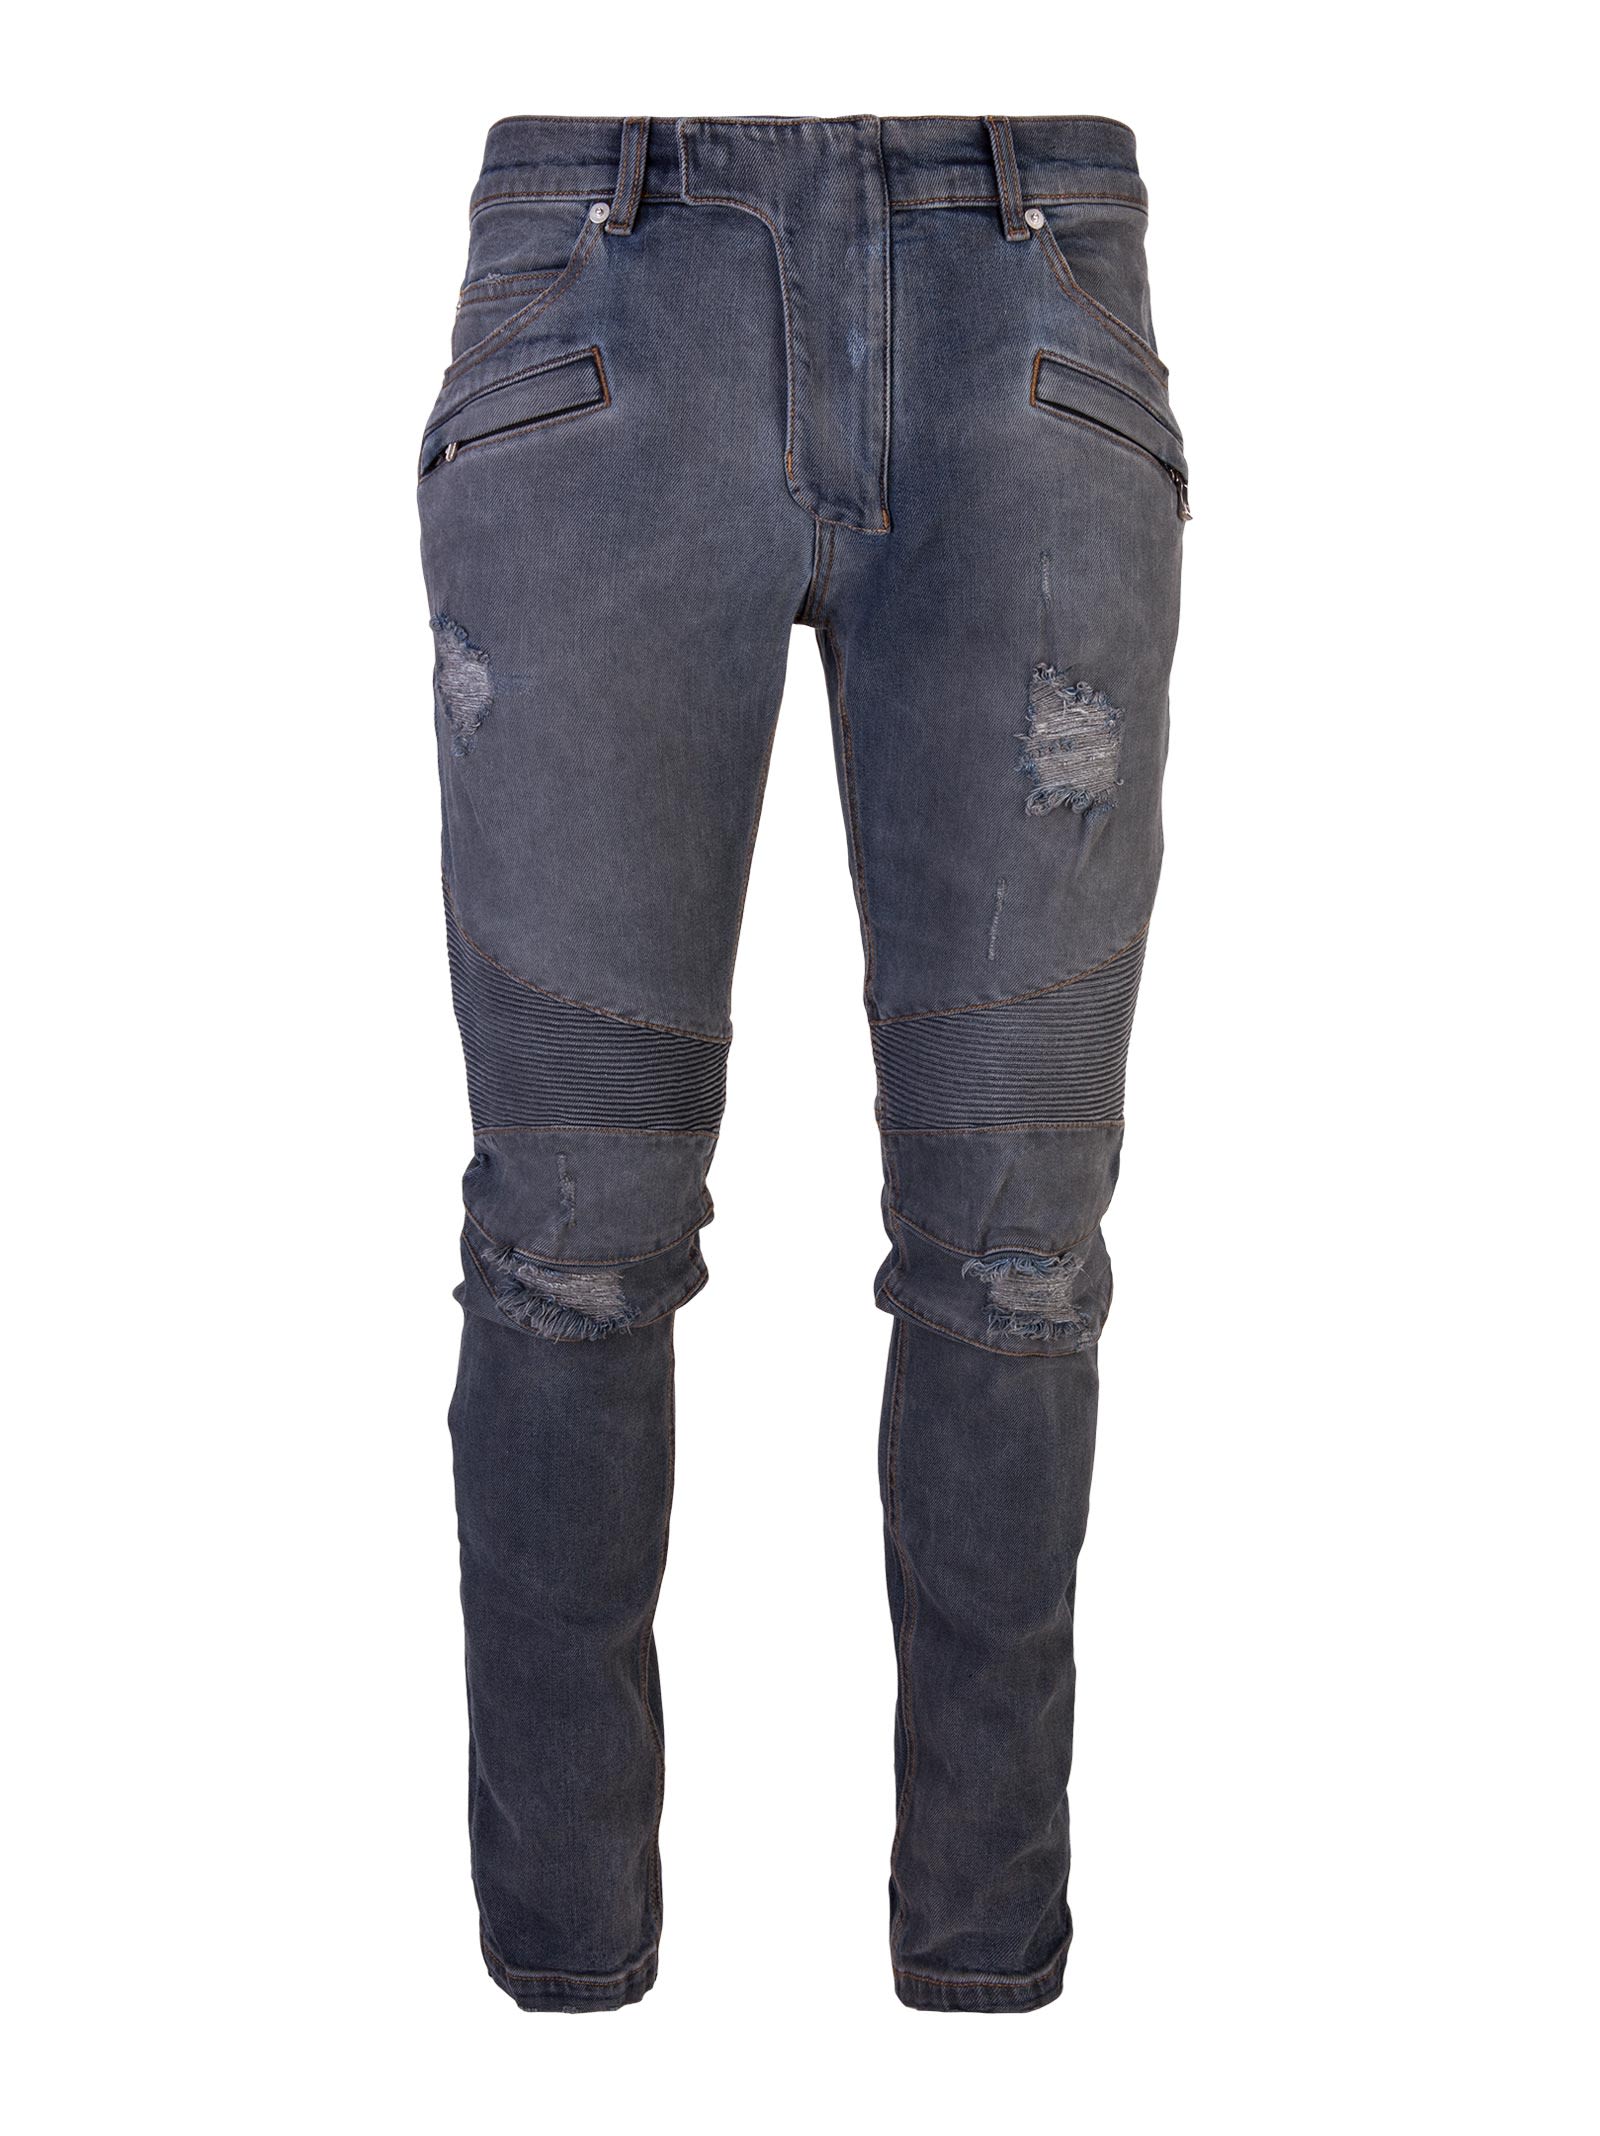 italist | Best price in the market for Balmain Balmain Paris Jeans ...